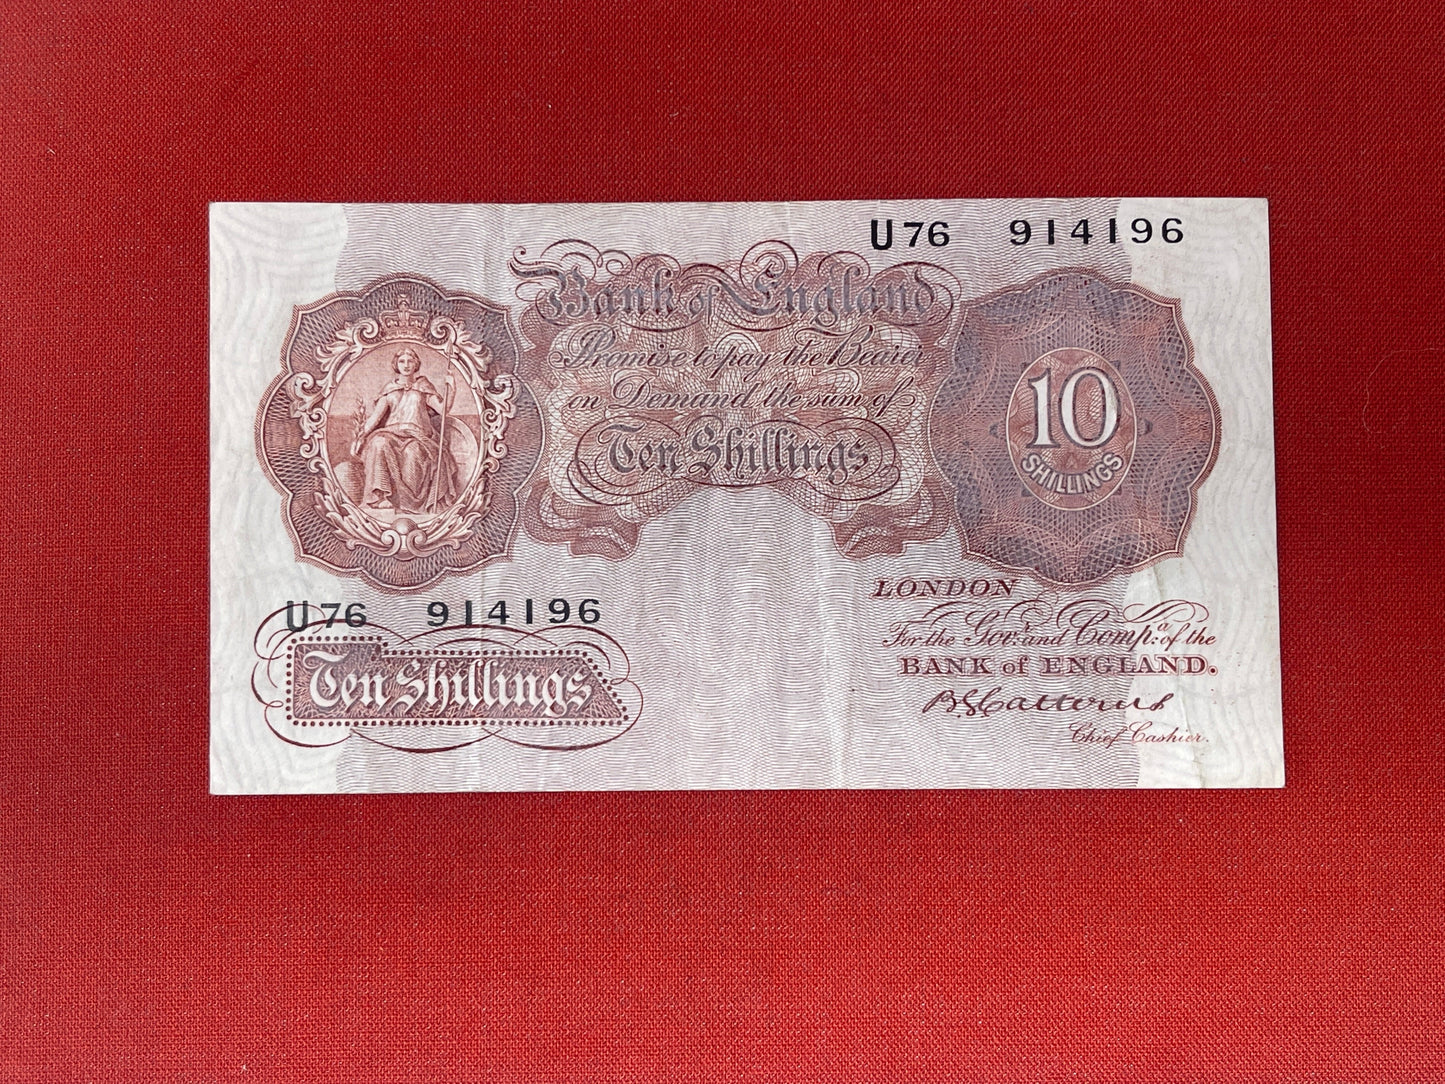 B.G. Catterns, 10 Shilling, U76 914196 ( Dugg. B.223 ) Series "A" Britannia Issue 15th July 1930